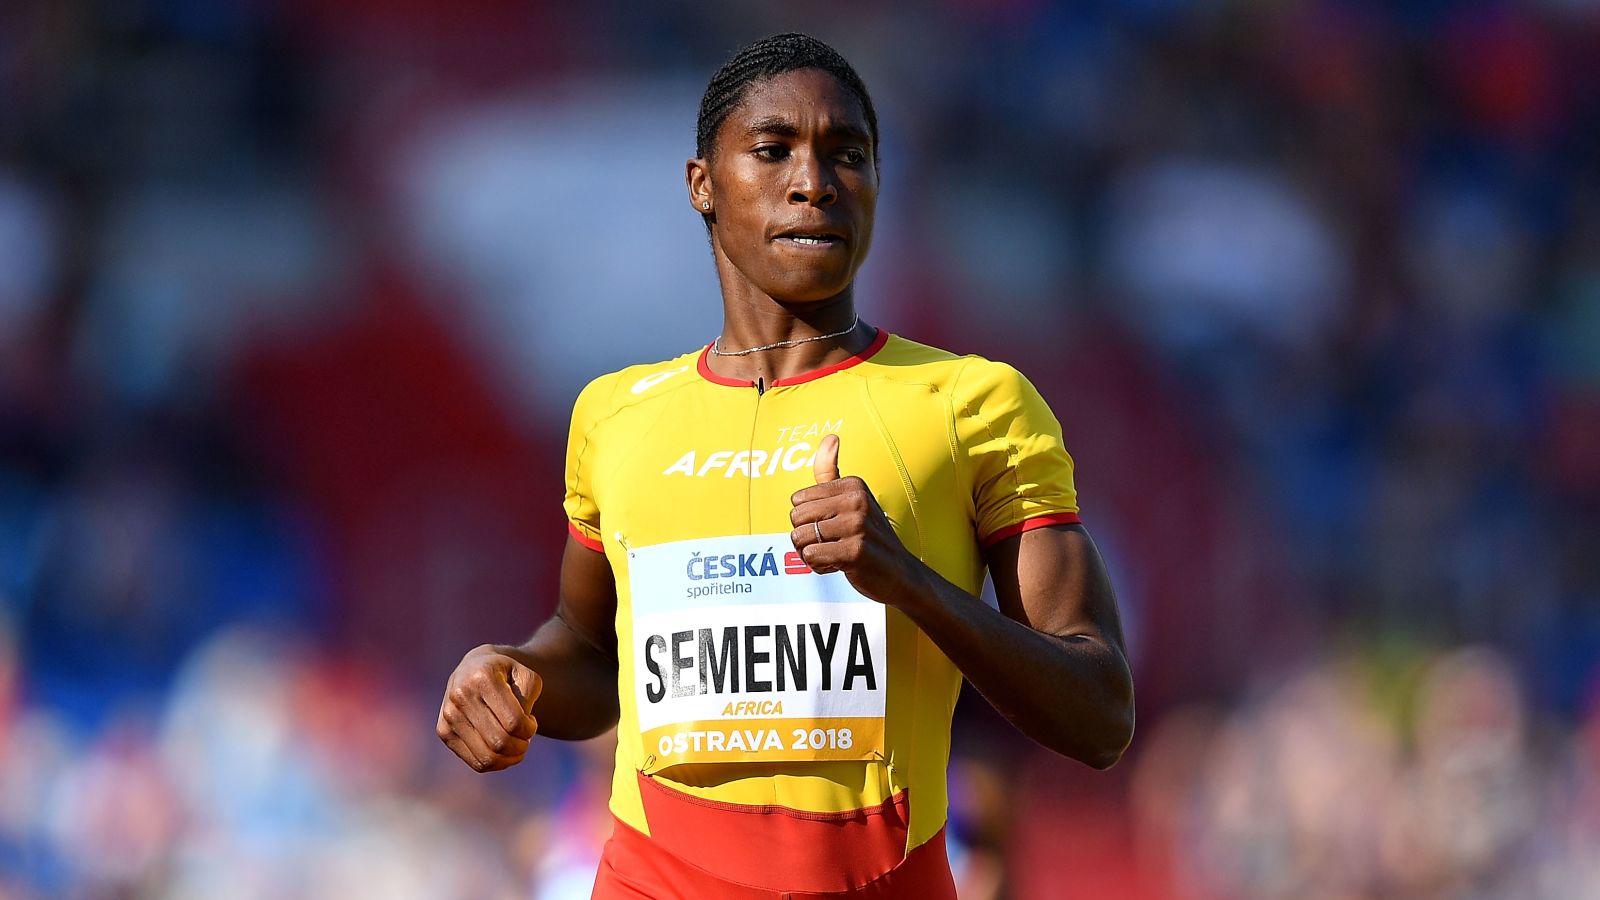 Olympic Champion Caster Semenya Loses Landmark Testosterone Levels